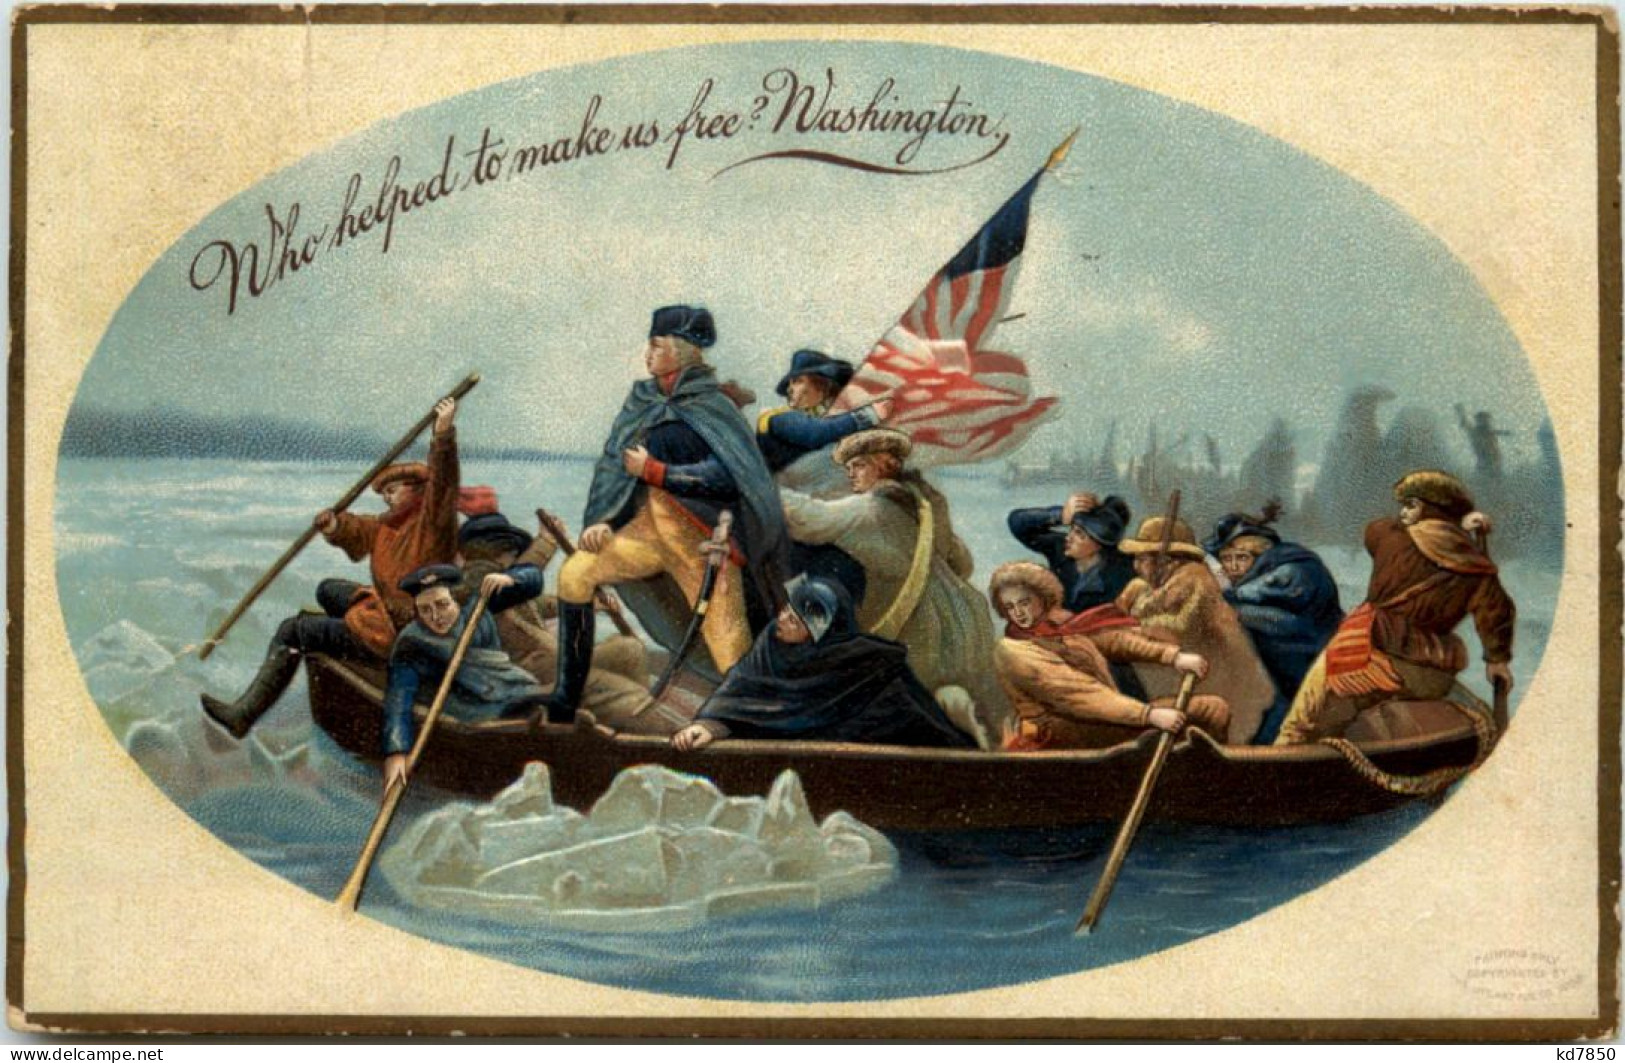 George Washington - Who Helped To Make Us Free? - Presidentes